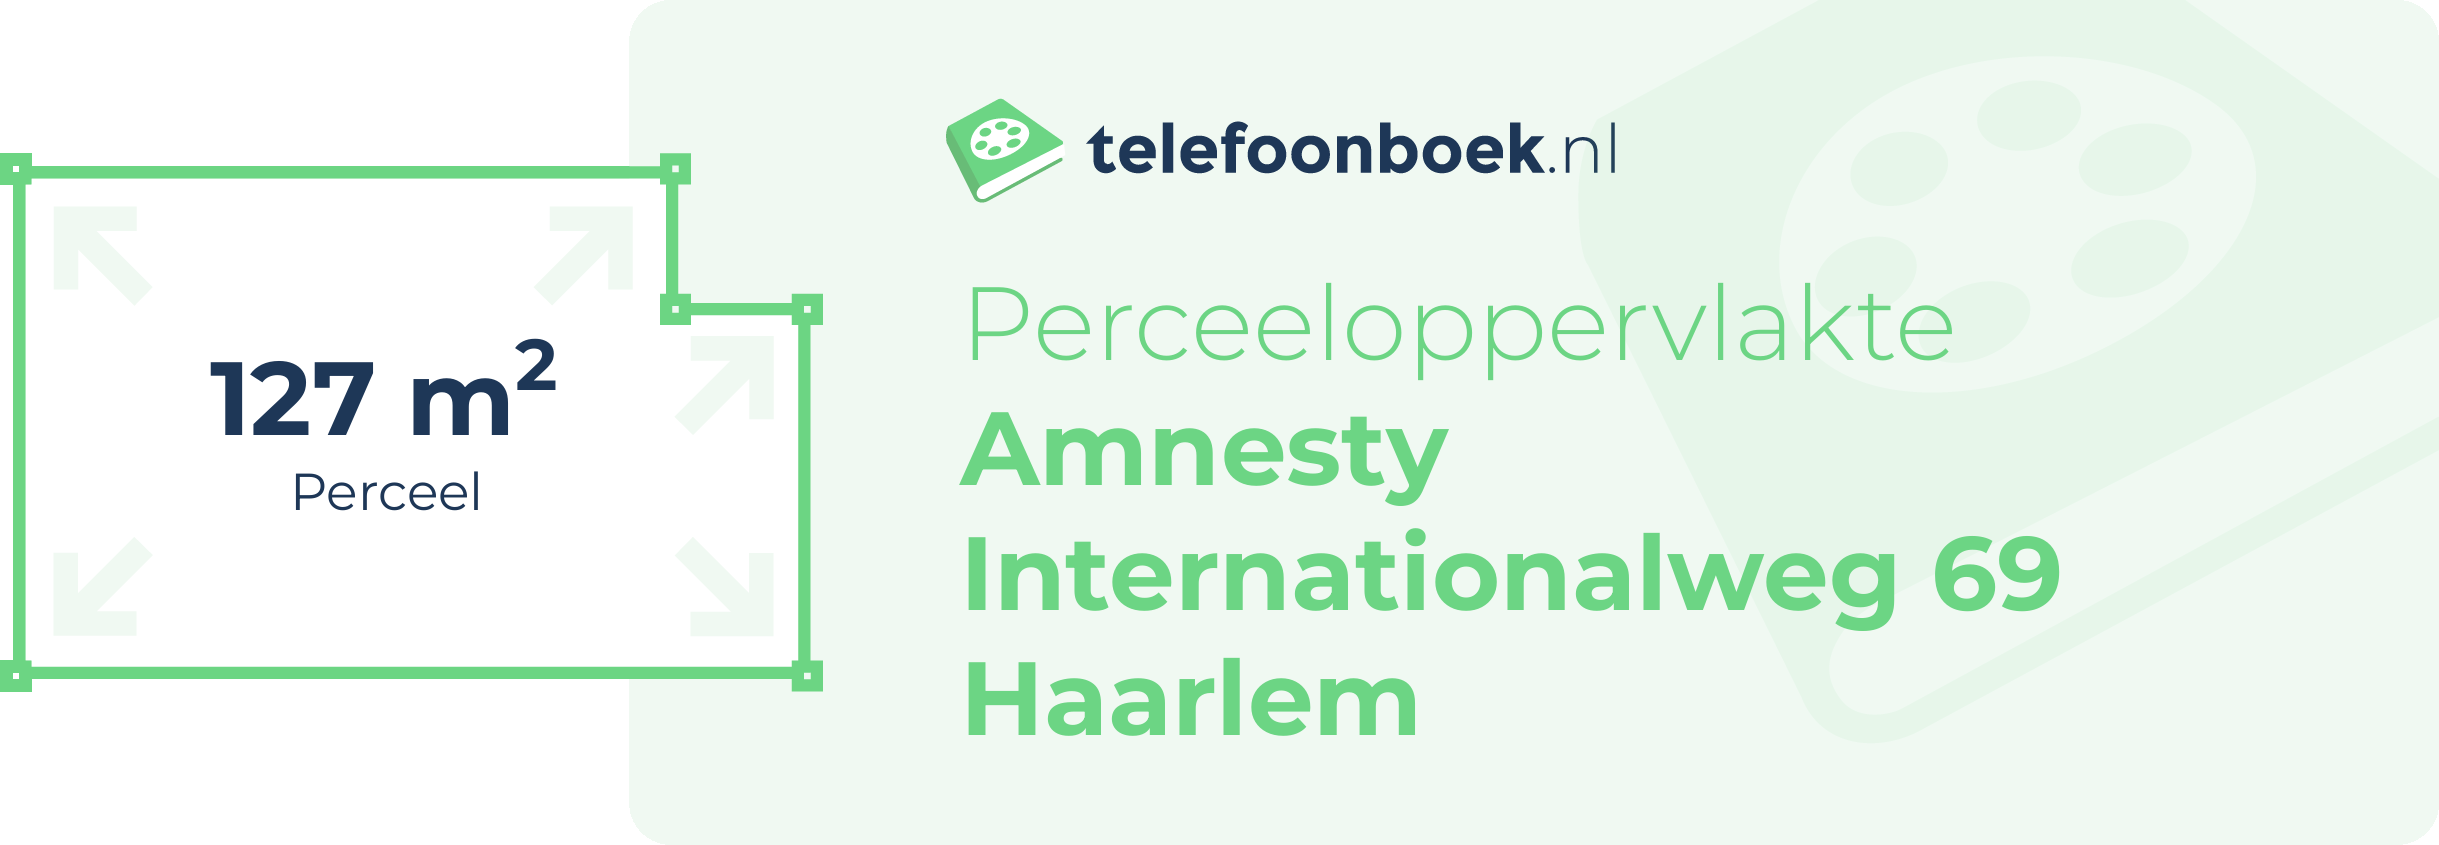 Perceeloppervlakte Amnesty Internationalweg 69 Haarlem